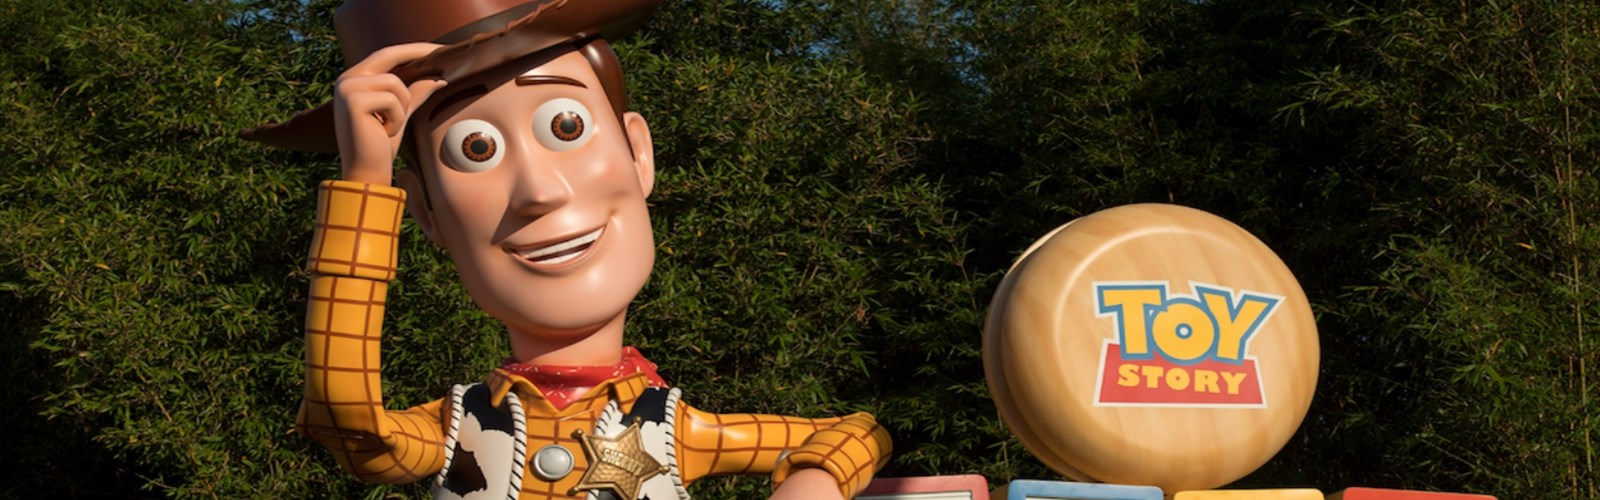 Toy Story Land at Disney